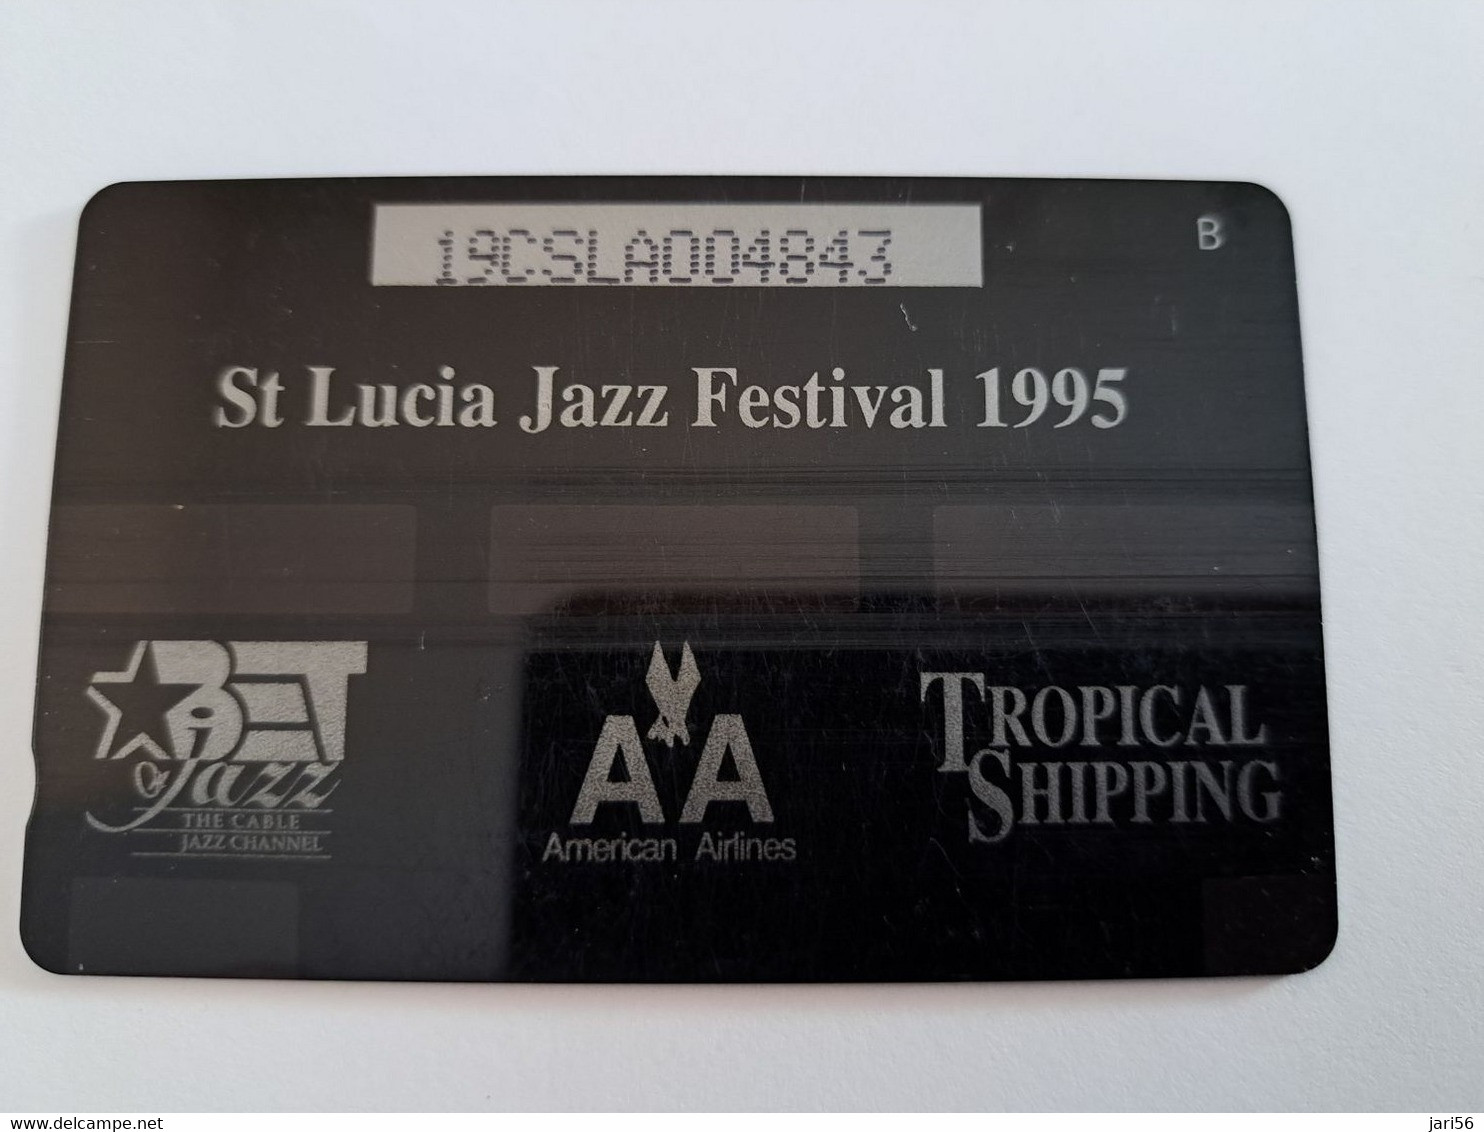 ST LUCIA    $ 20   CABLE & WIRELESS  STL-19A  19CSLA      JAZZ FESTIVAL 1995  Fine Used Card ** 10880** - Santa Lucía